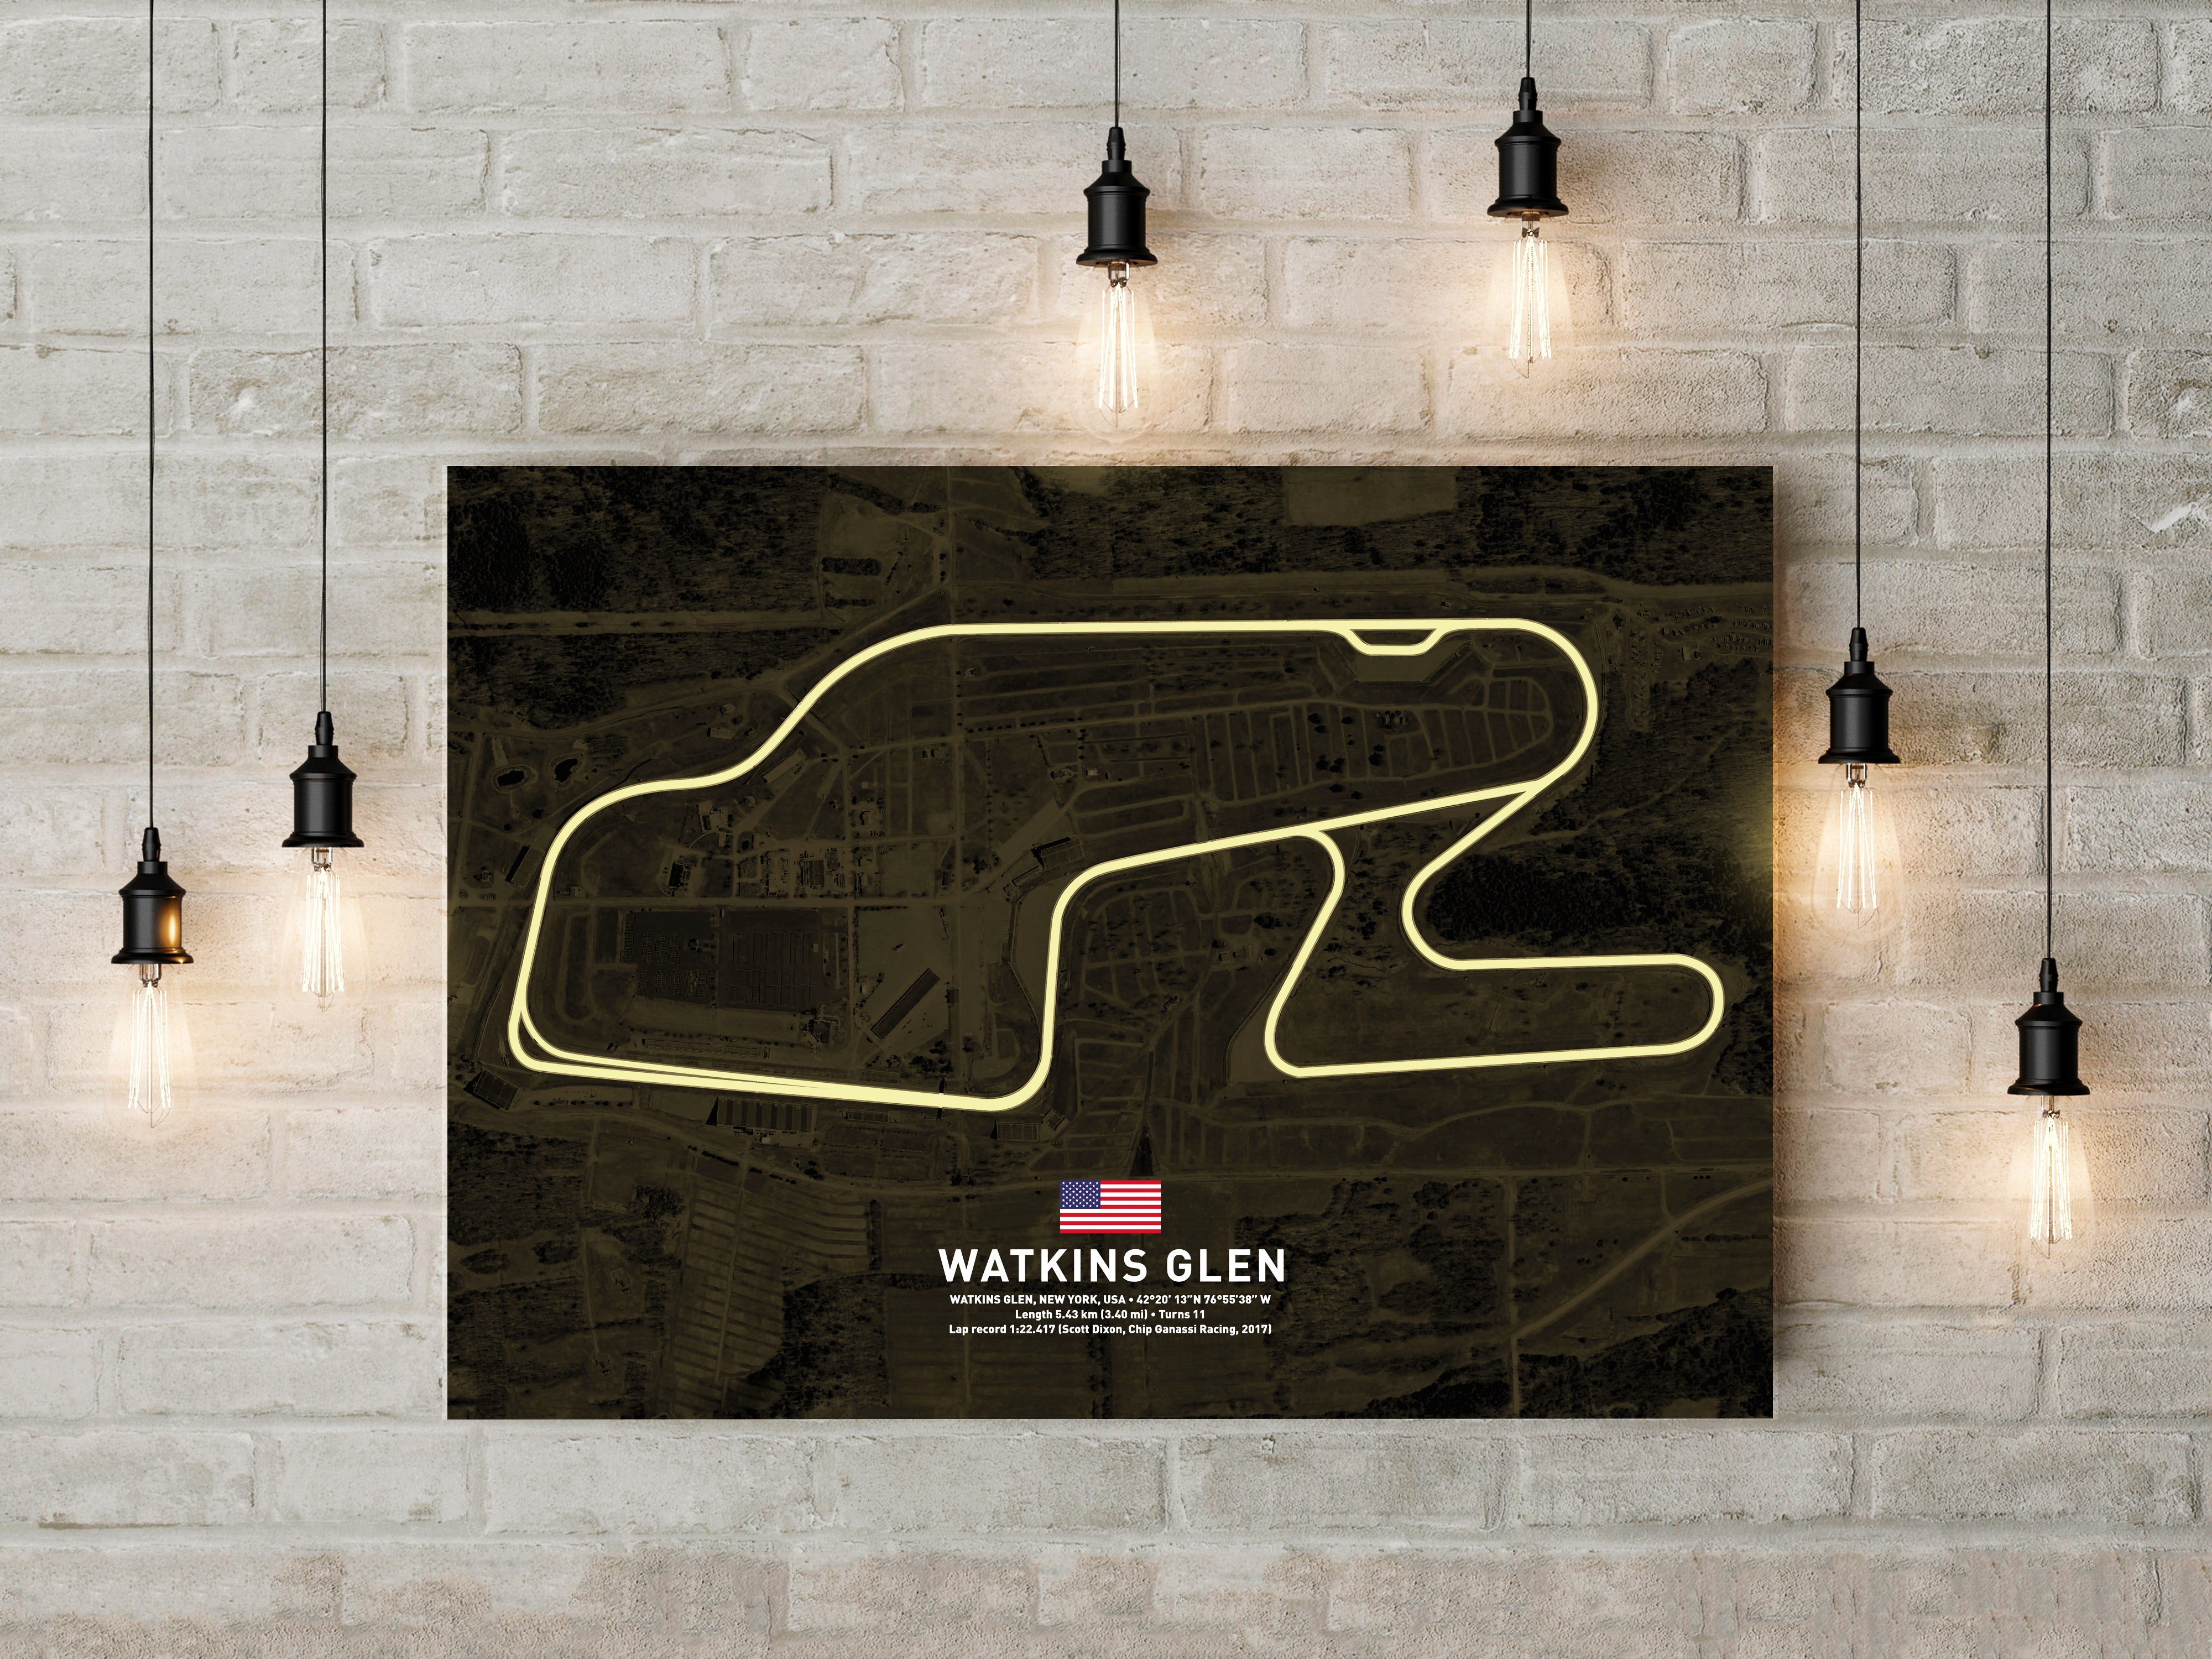 Watkins Glen International